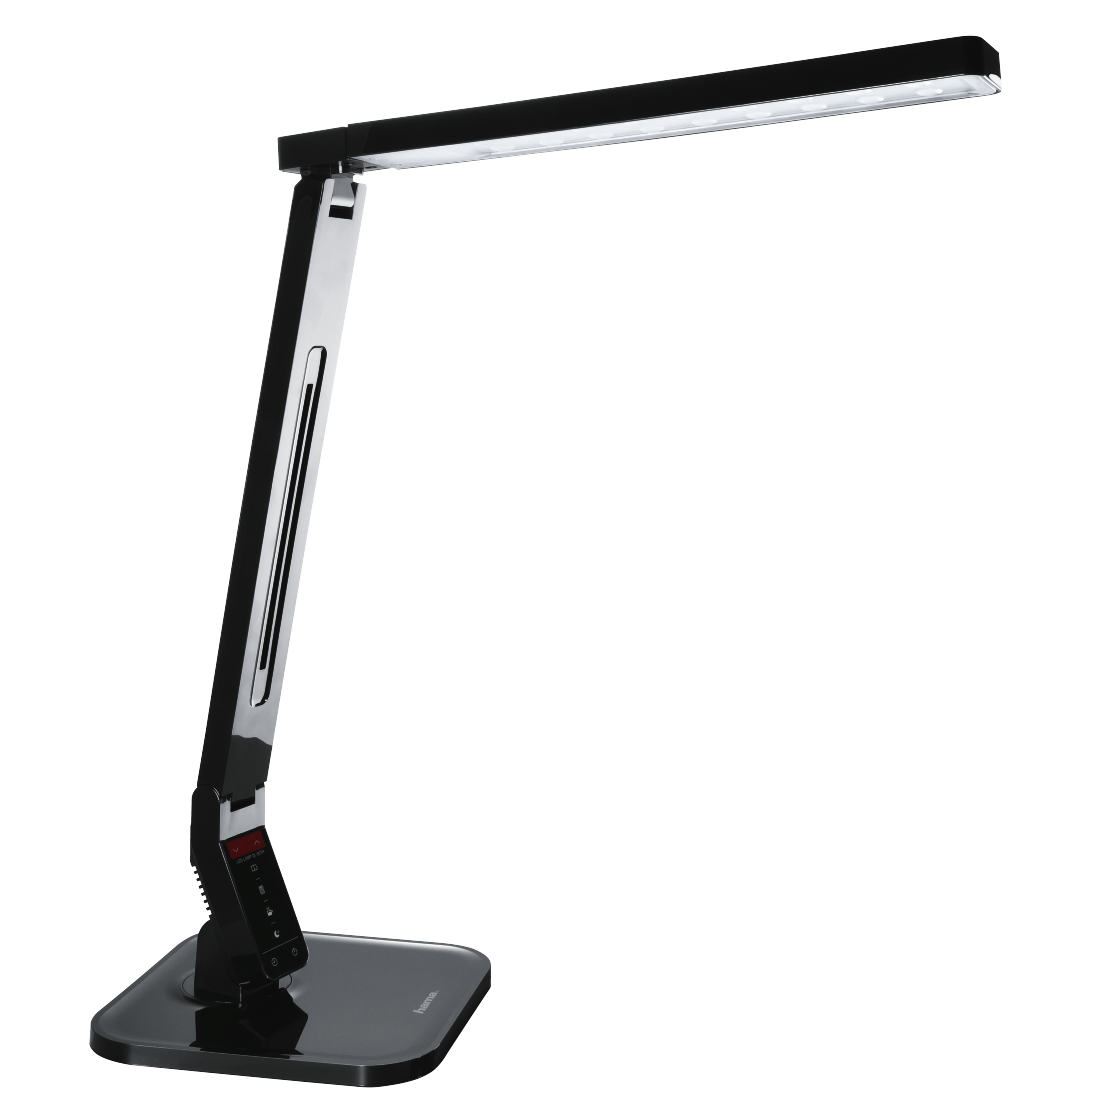 00112297 Hama "SL 95" LED Desk Lamp, 4 light modes/timer, black | hama.com